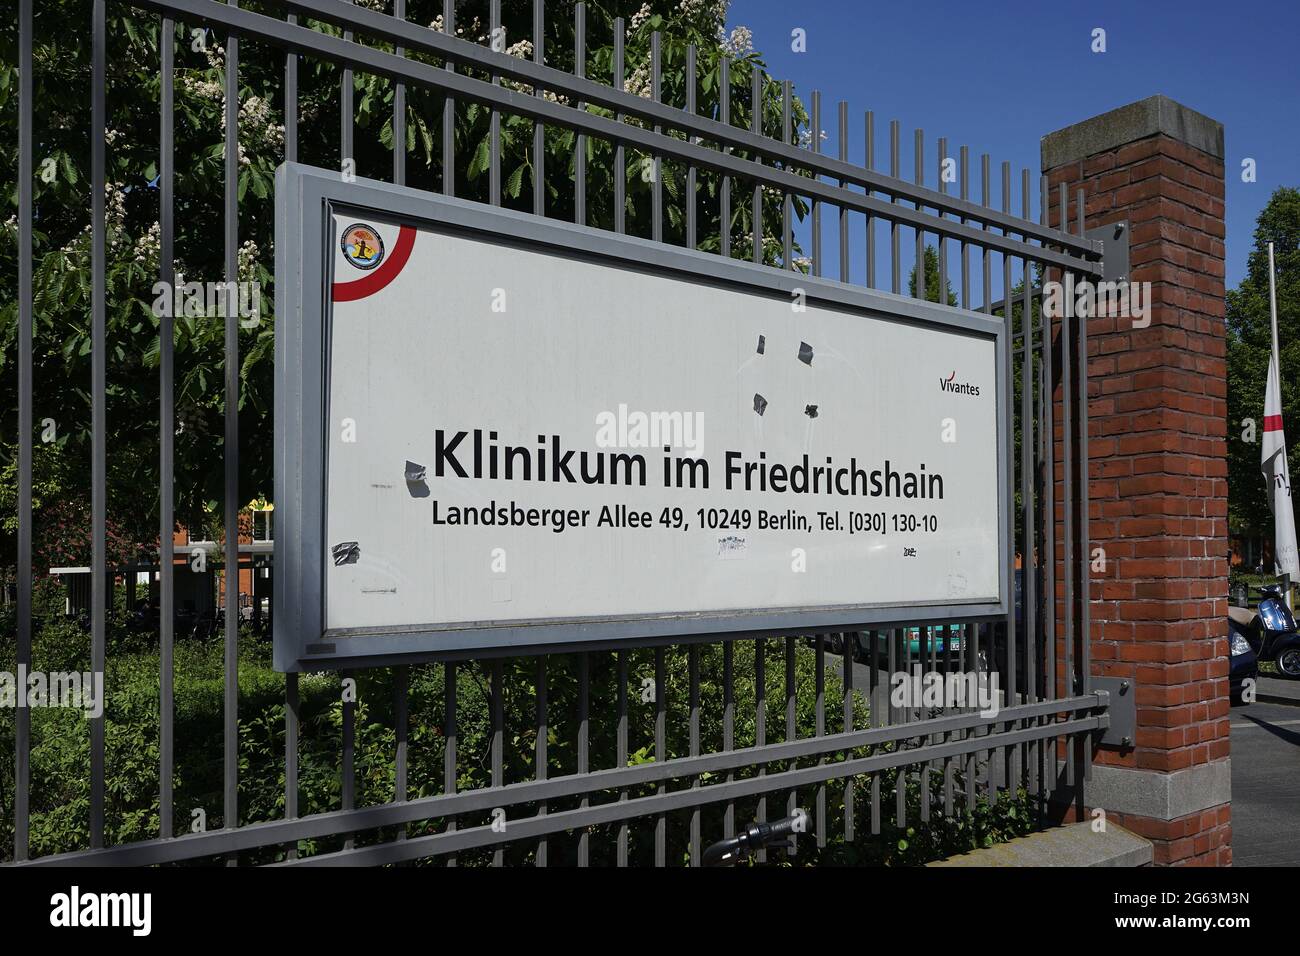 Vivantes Klinikum im Friedrichshain (Vivantes Clinic in Friedrichshain) Stock Photo